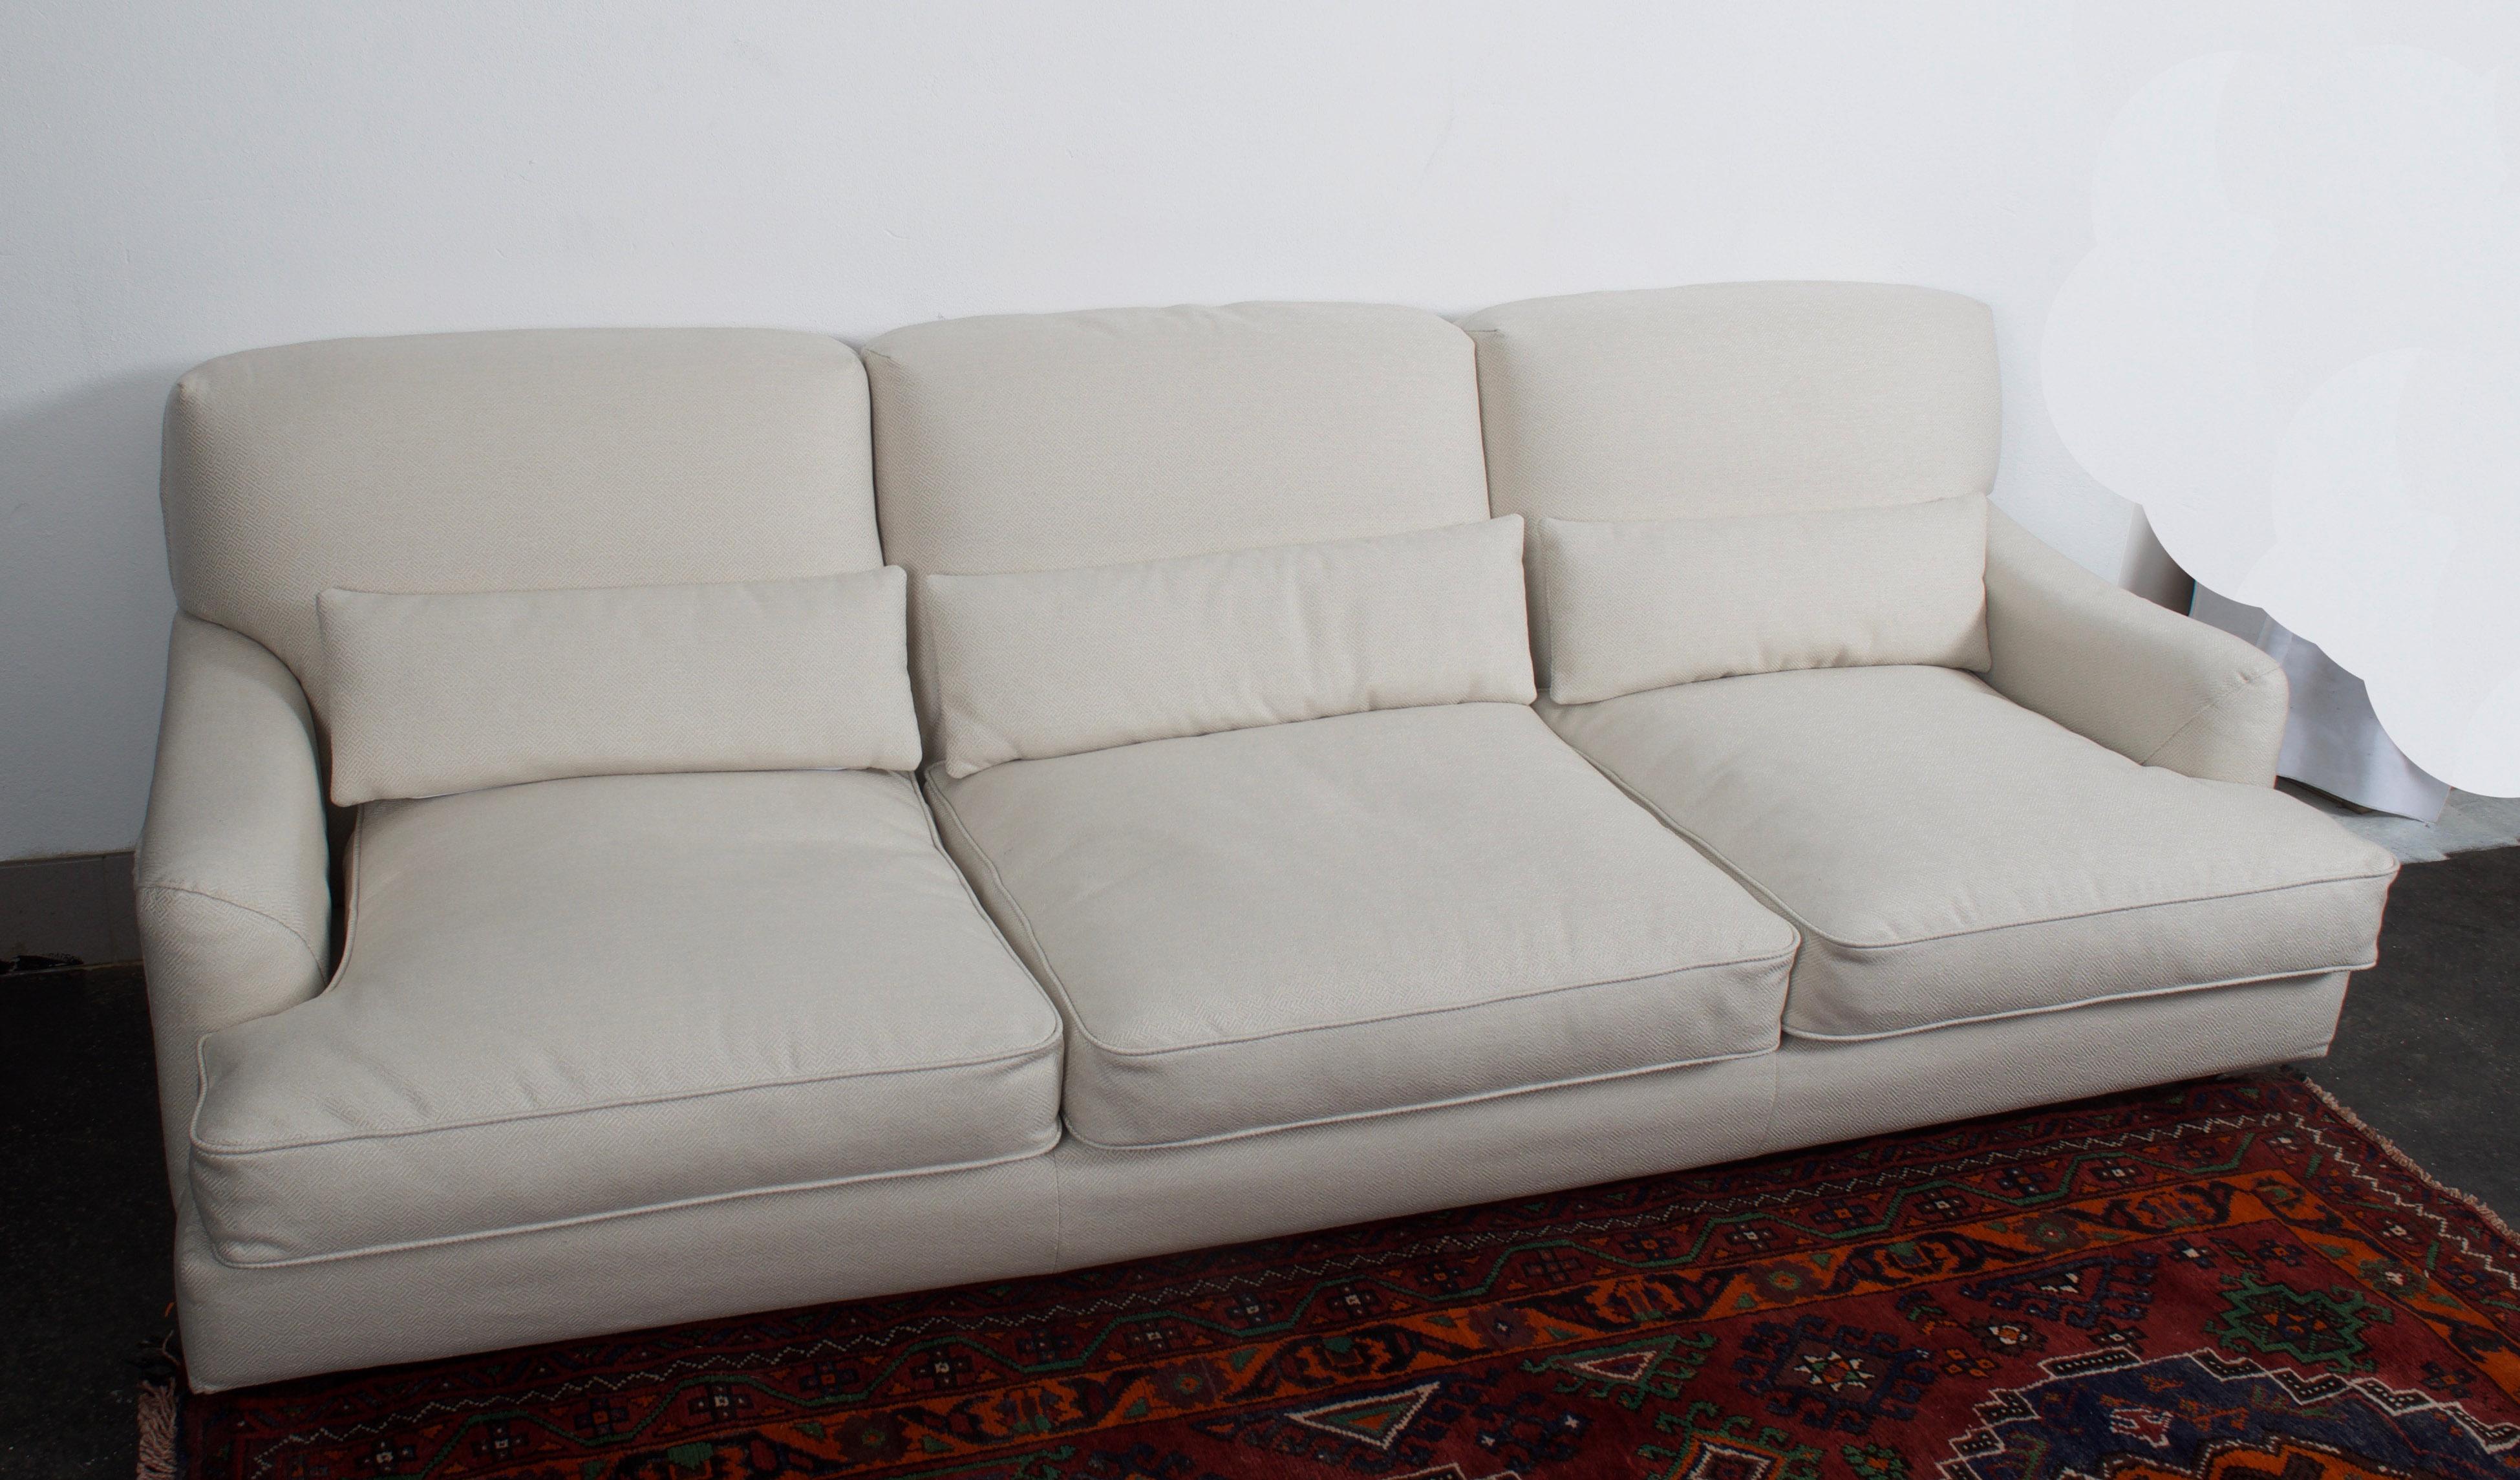 Vico Magistretti for Depadova Three-Seat Sofa Model Raffles For Sale 12